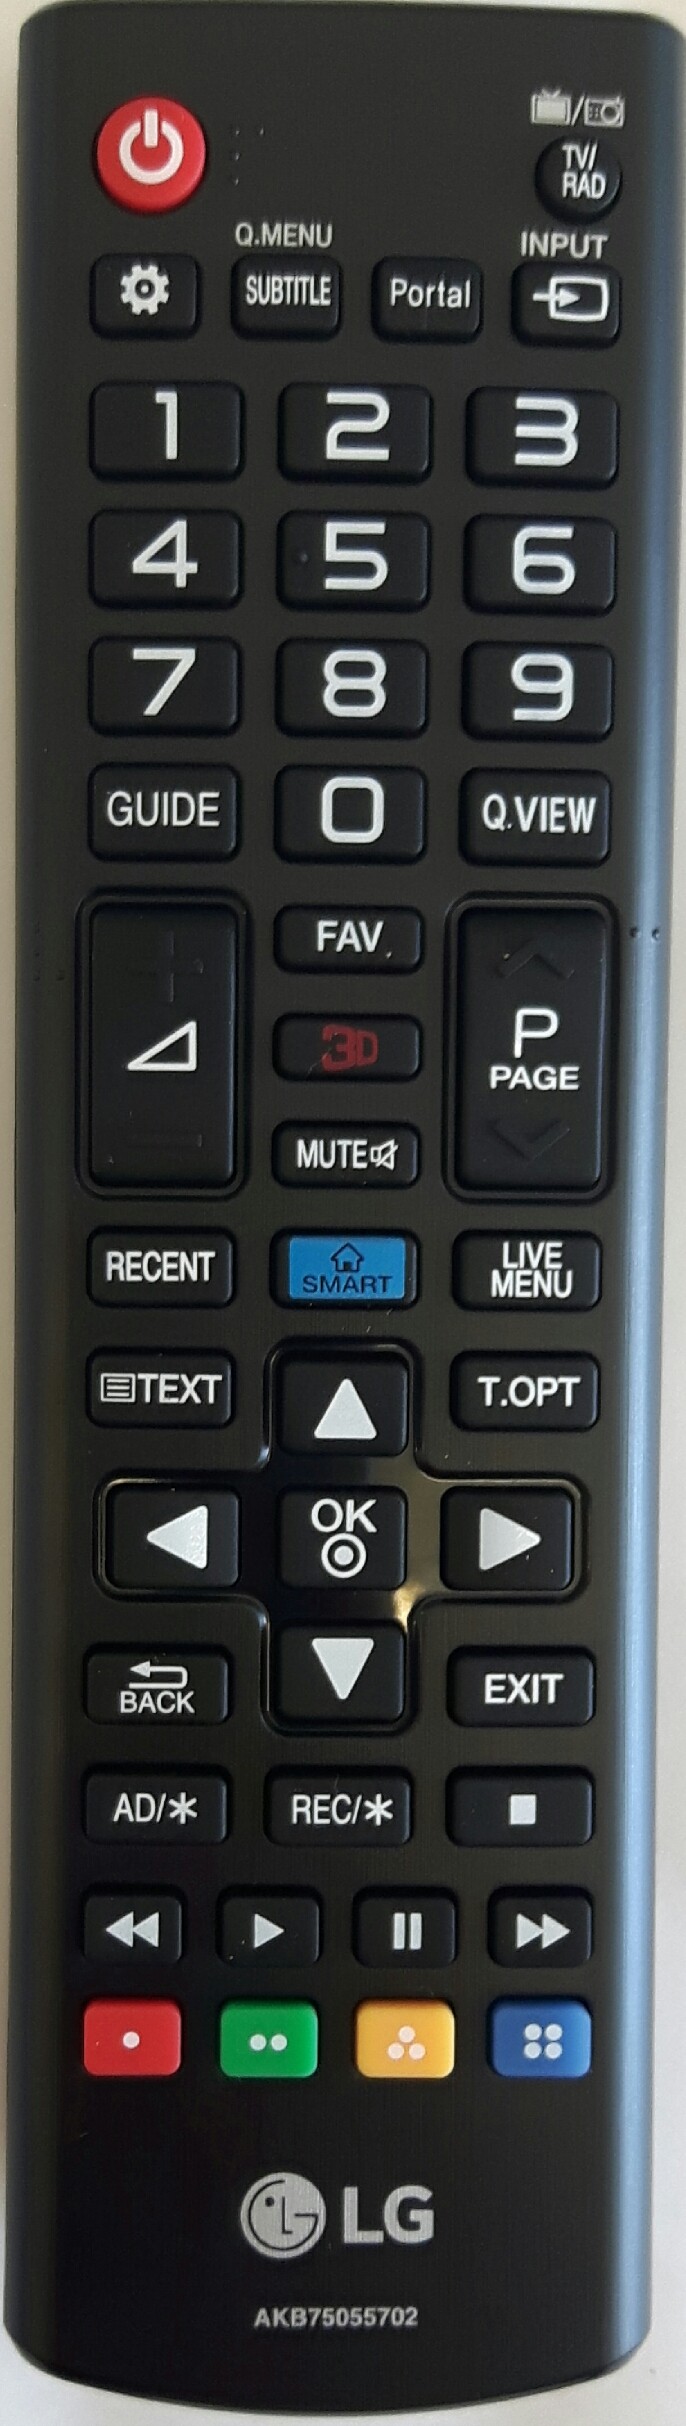 LG AKB73275606 Remote Control Original